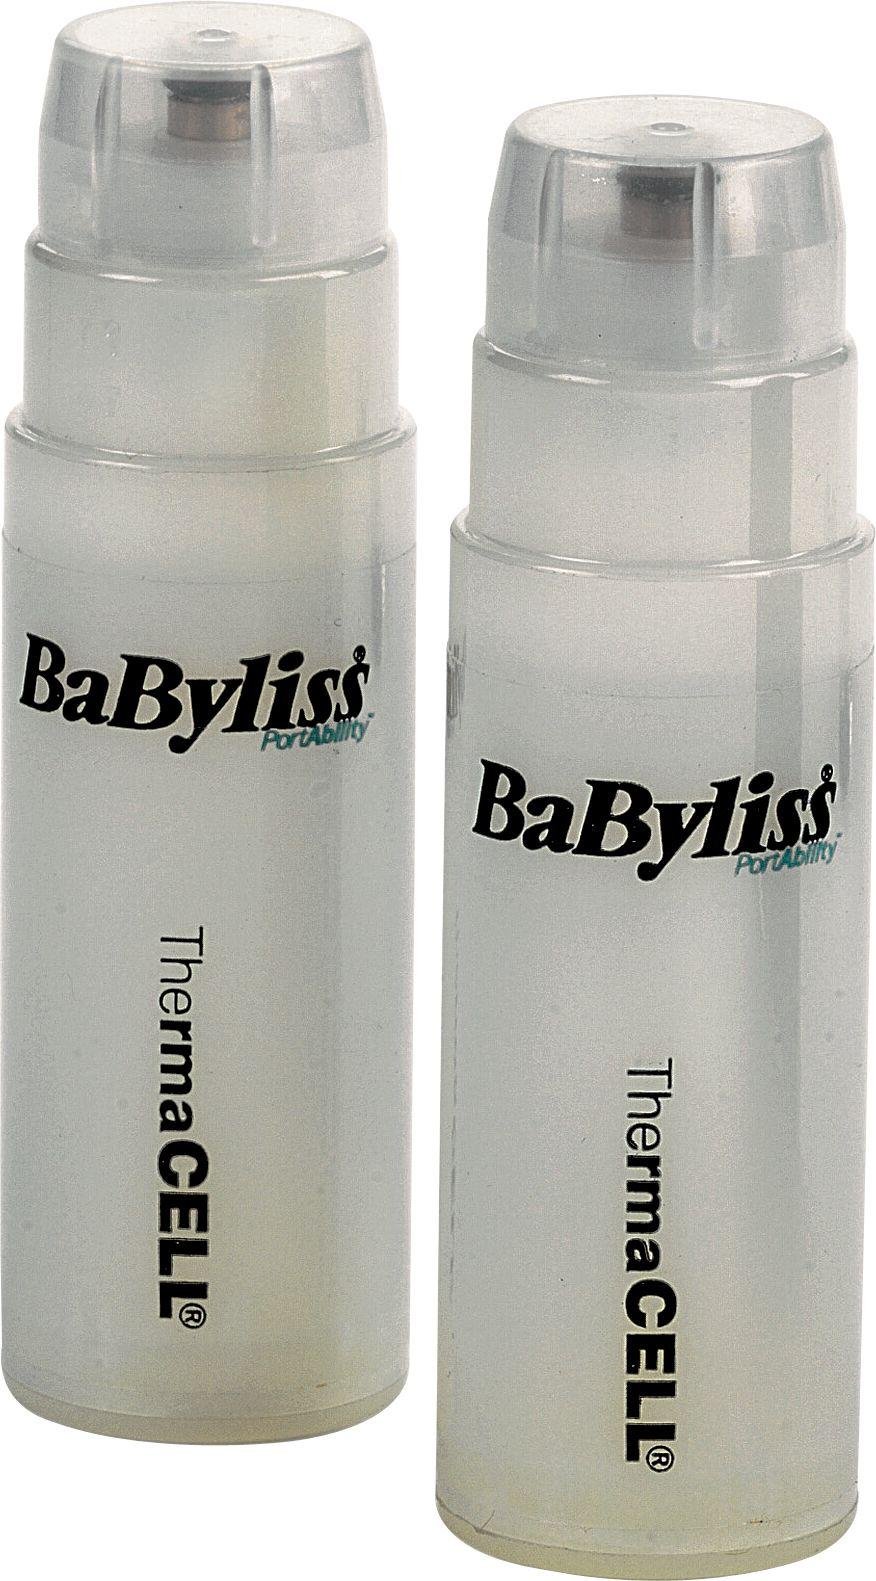 babyliss gas straighteners